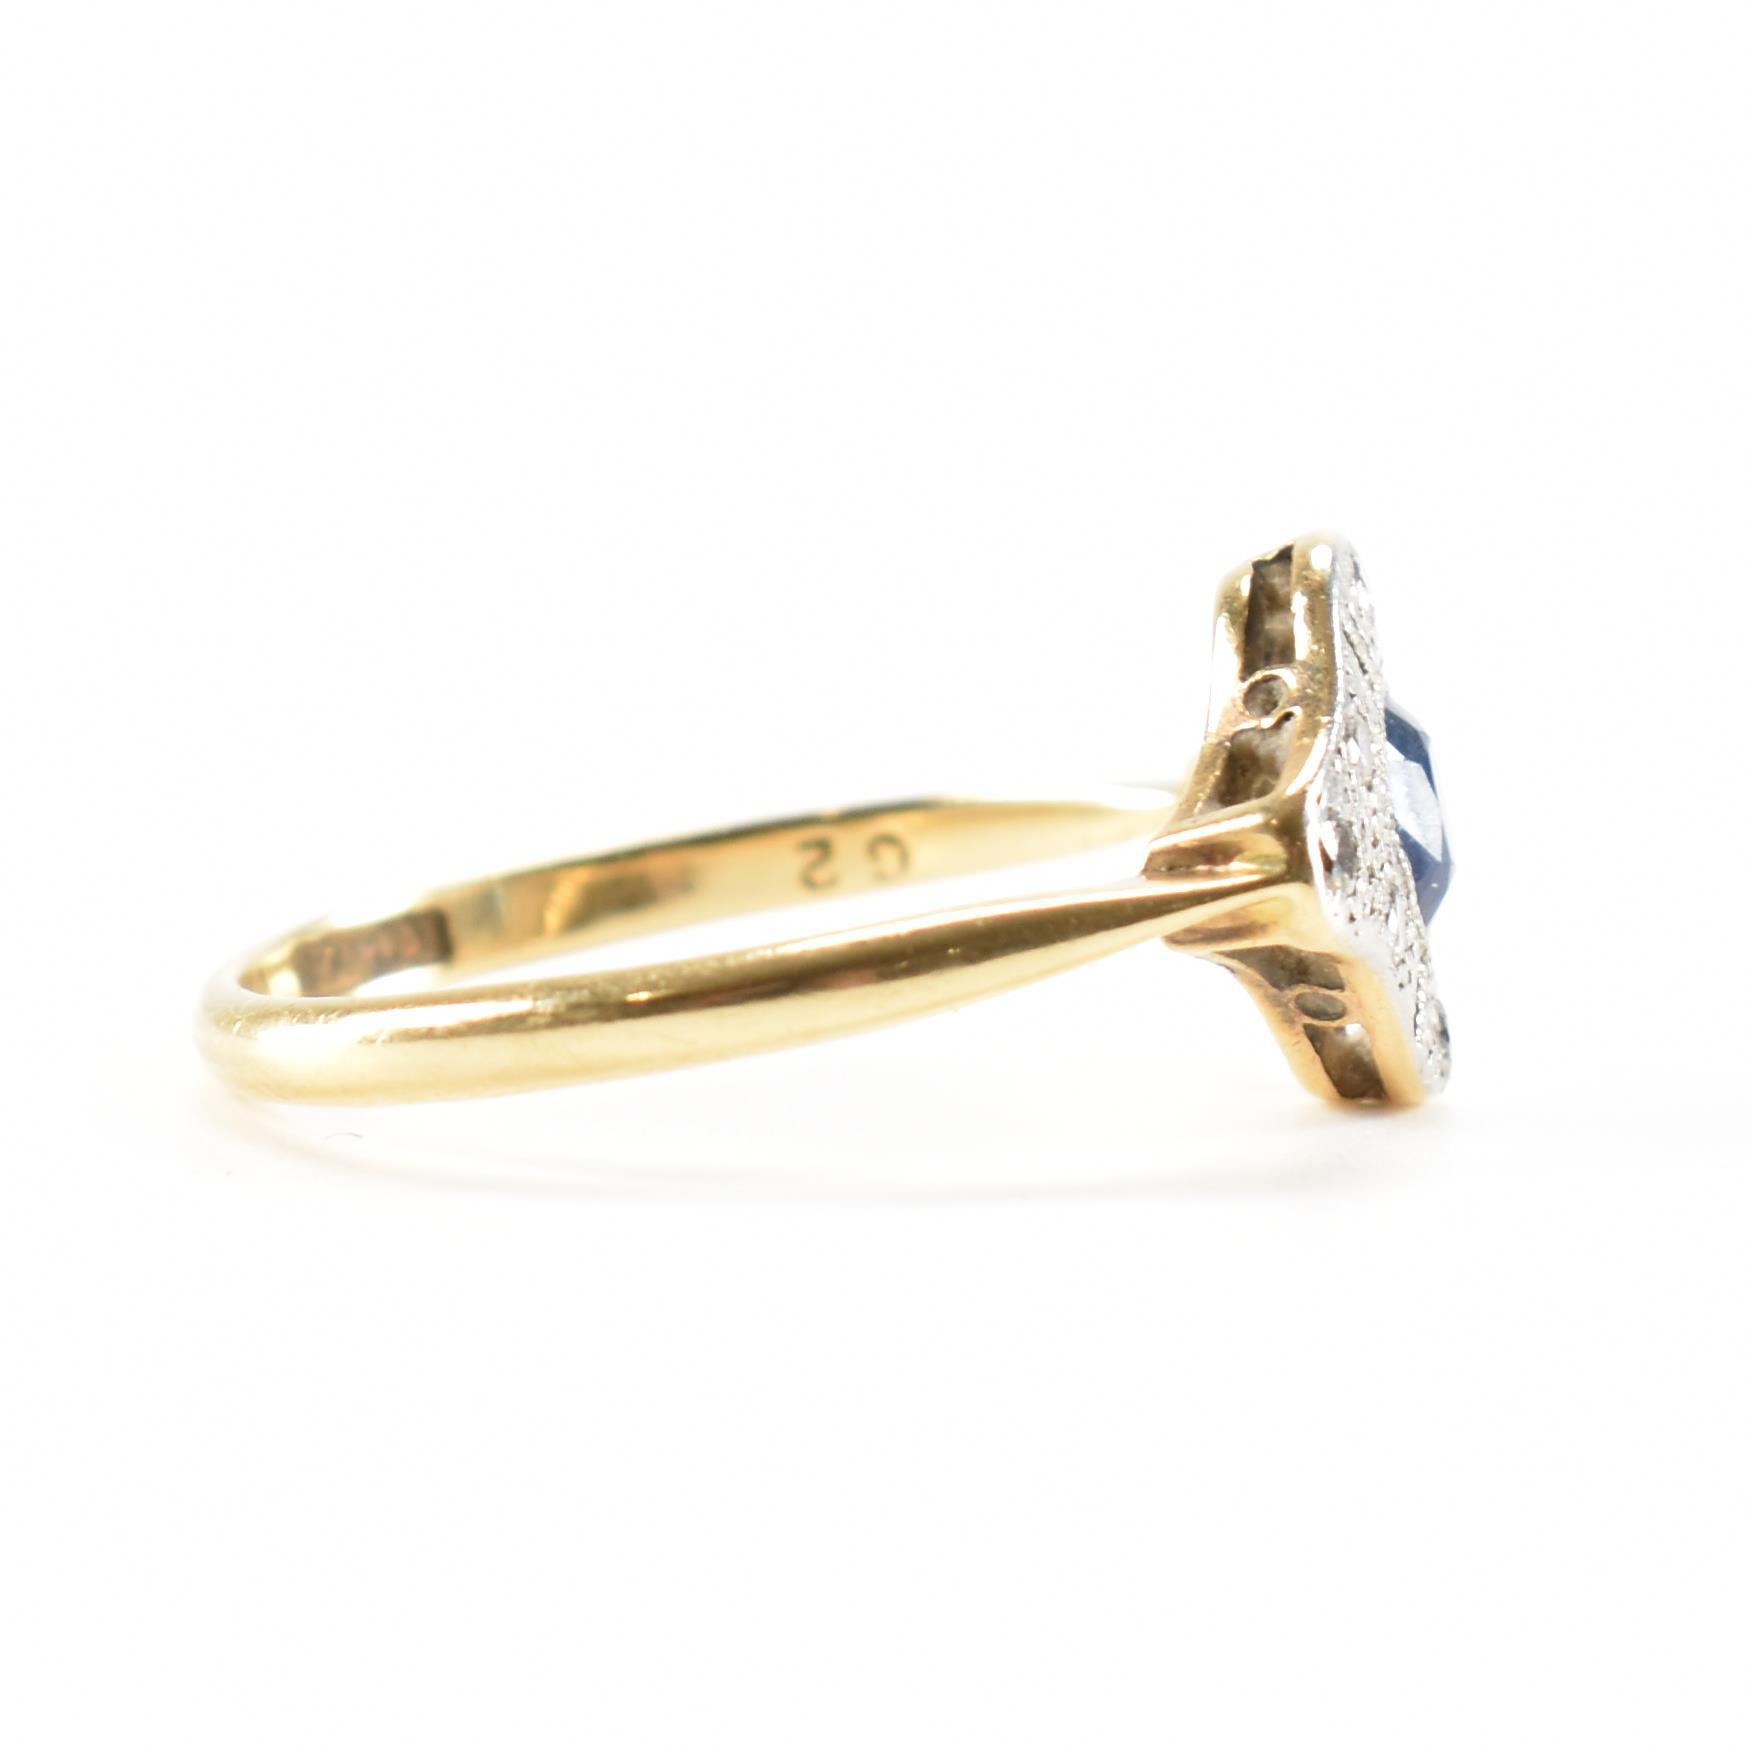 1920s 18CT GOLD PLATINUM DIAMOND & SAPPHIRE RING - Image 5 of 10